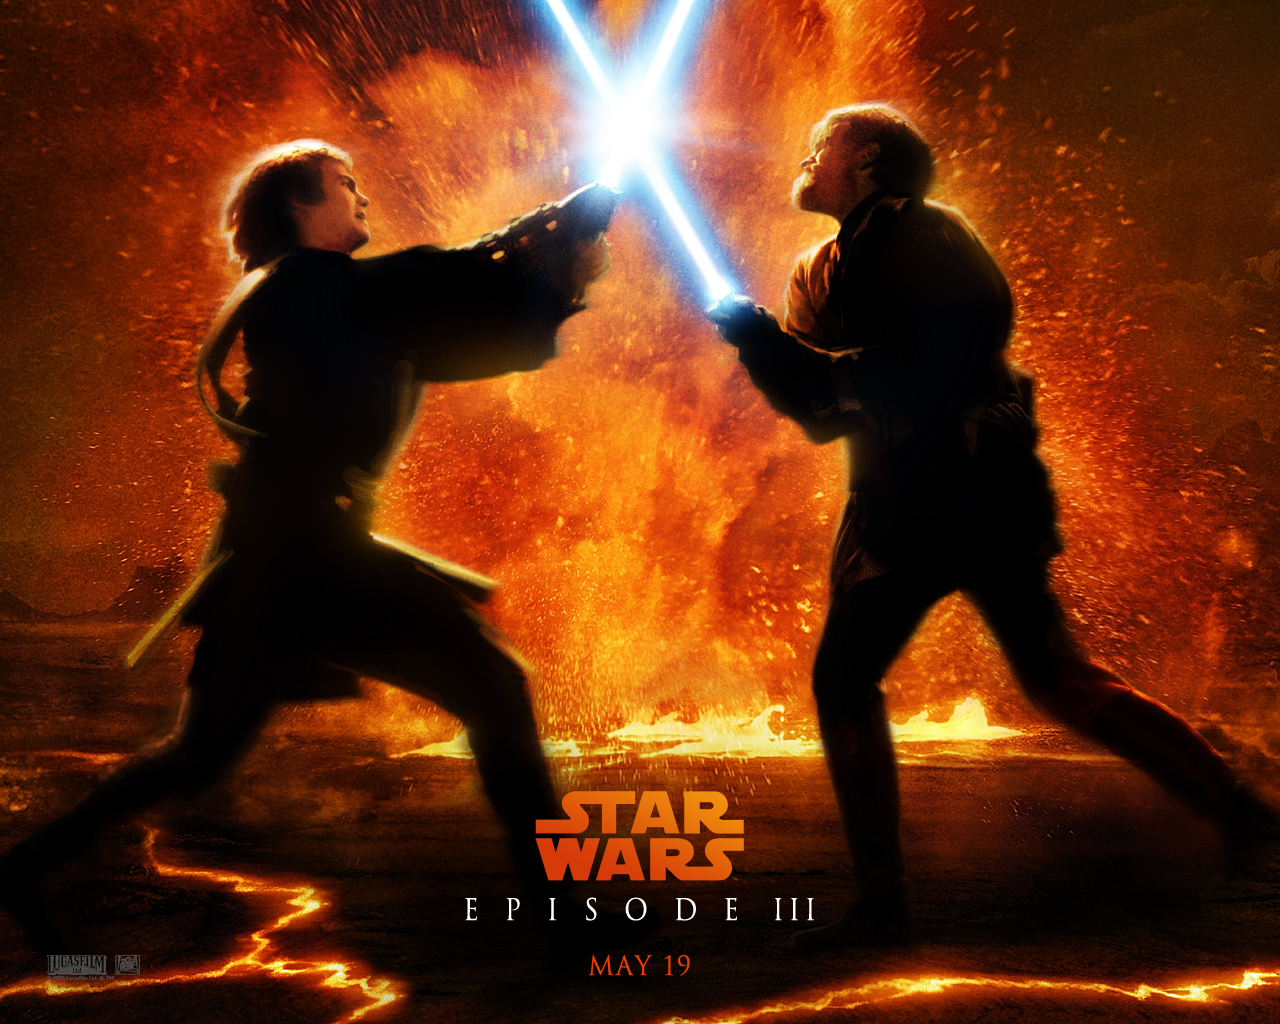 https://blogger.googleusercontent.com/img/b/R29vZ2xl/AVvXsEgSNz8r3FDPaXH3BRsNc7JQxe4RjThCQgsxT7koyvGYRFTOgaEXY8GzAaGU1GRJq8iNyI6PGdXXZh2emRwyqqECbEIjy7zDX0rUFfAPV5DxWTqDRLNXGX86EXxynAAzo763zUq6K_f8n4ct/s1600/Star+Wars+-+Episode+III+-+Revenge+of+the+Sith+-+Movie+Wallpaper+-+02.jpg